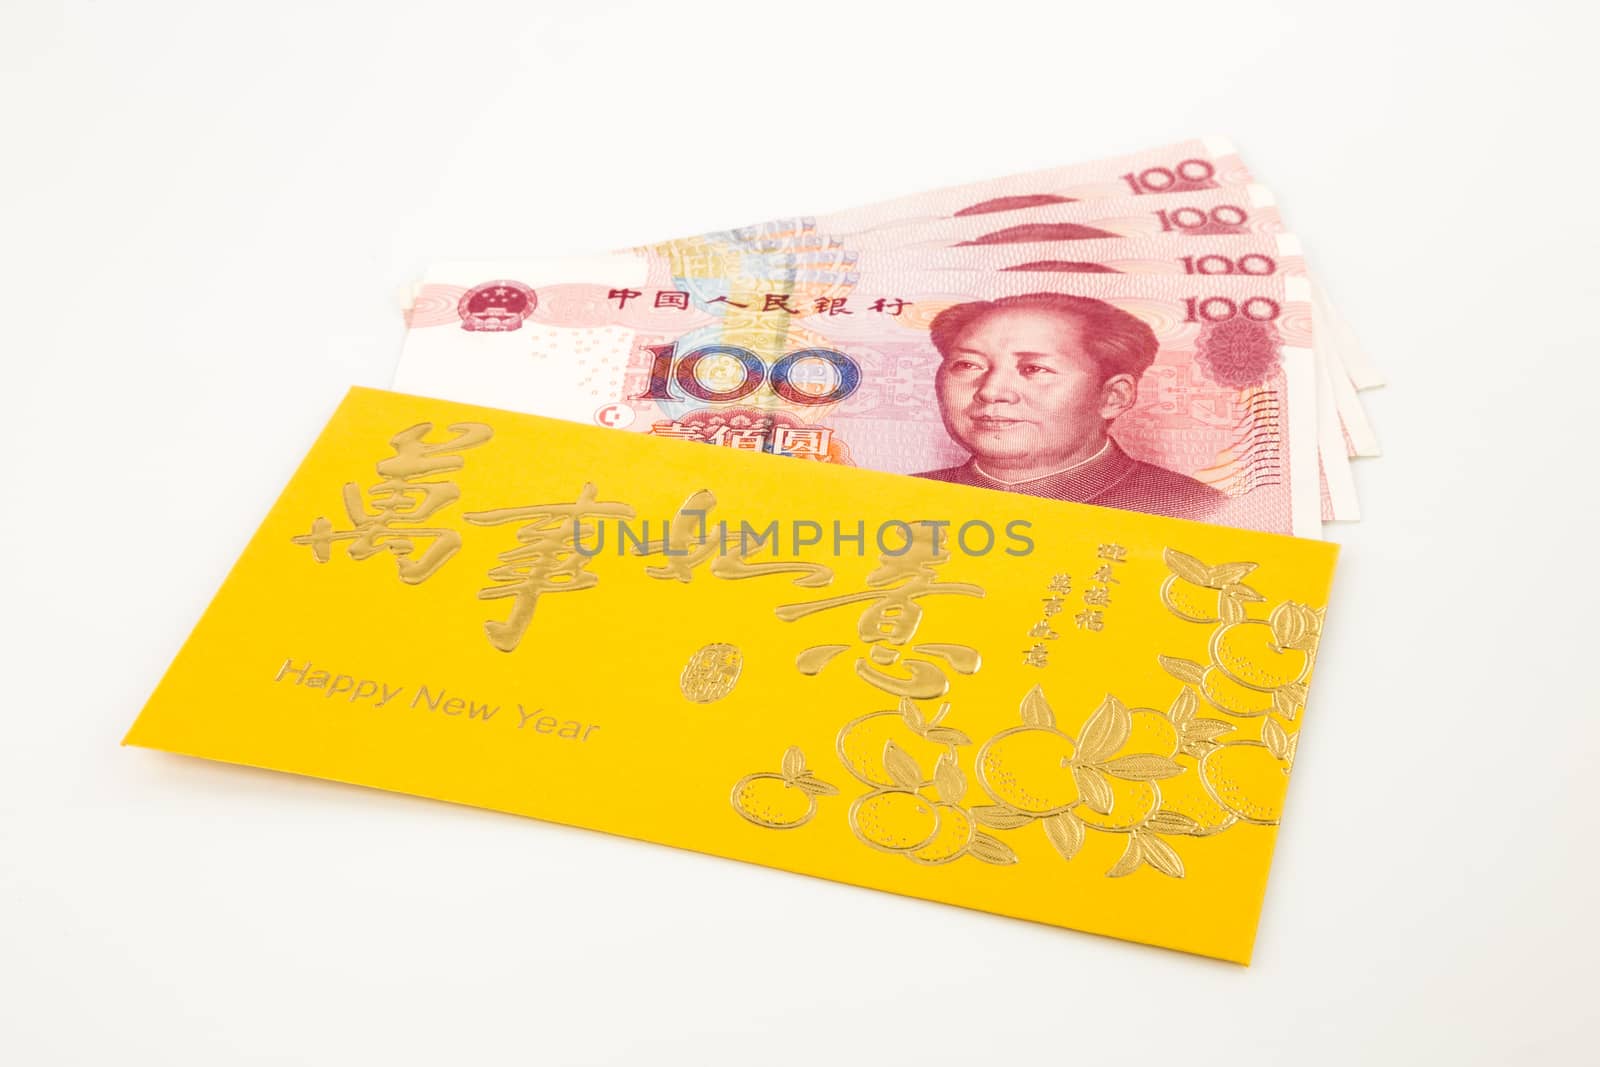 yuan banknote and golden envelope by vinnstock